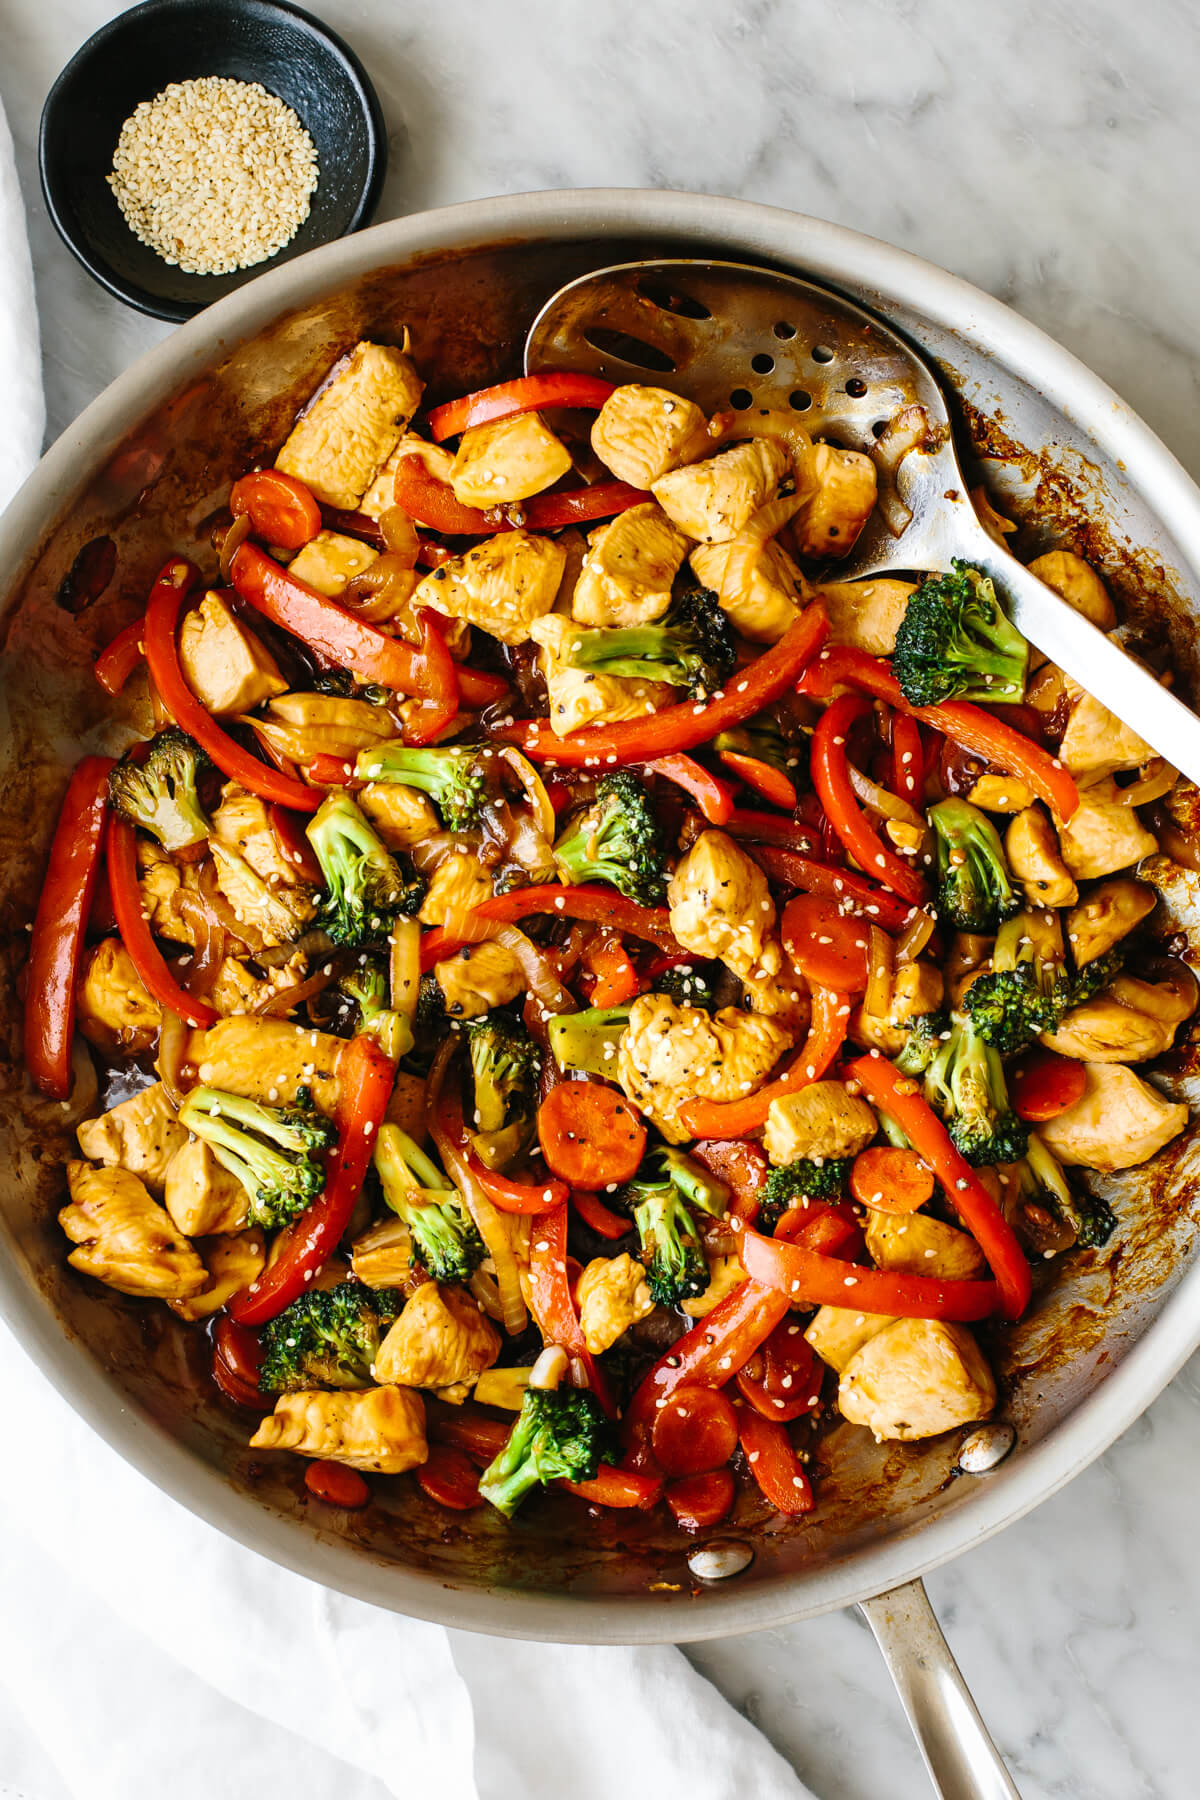 Chicken Stir-fry Recipe - Ideal You Weight Loss